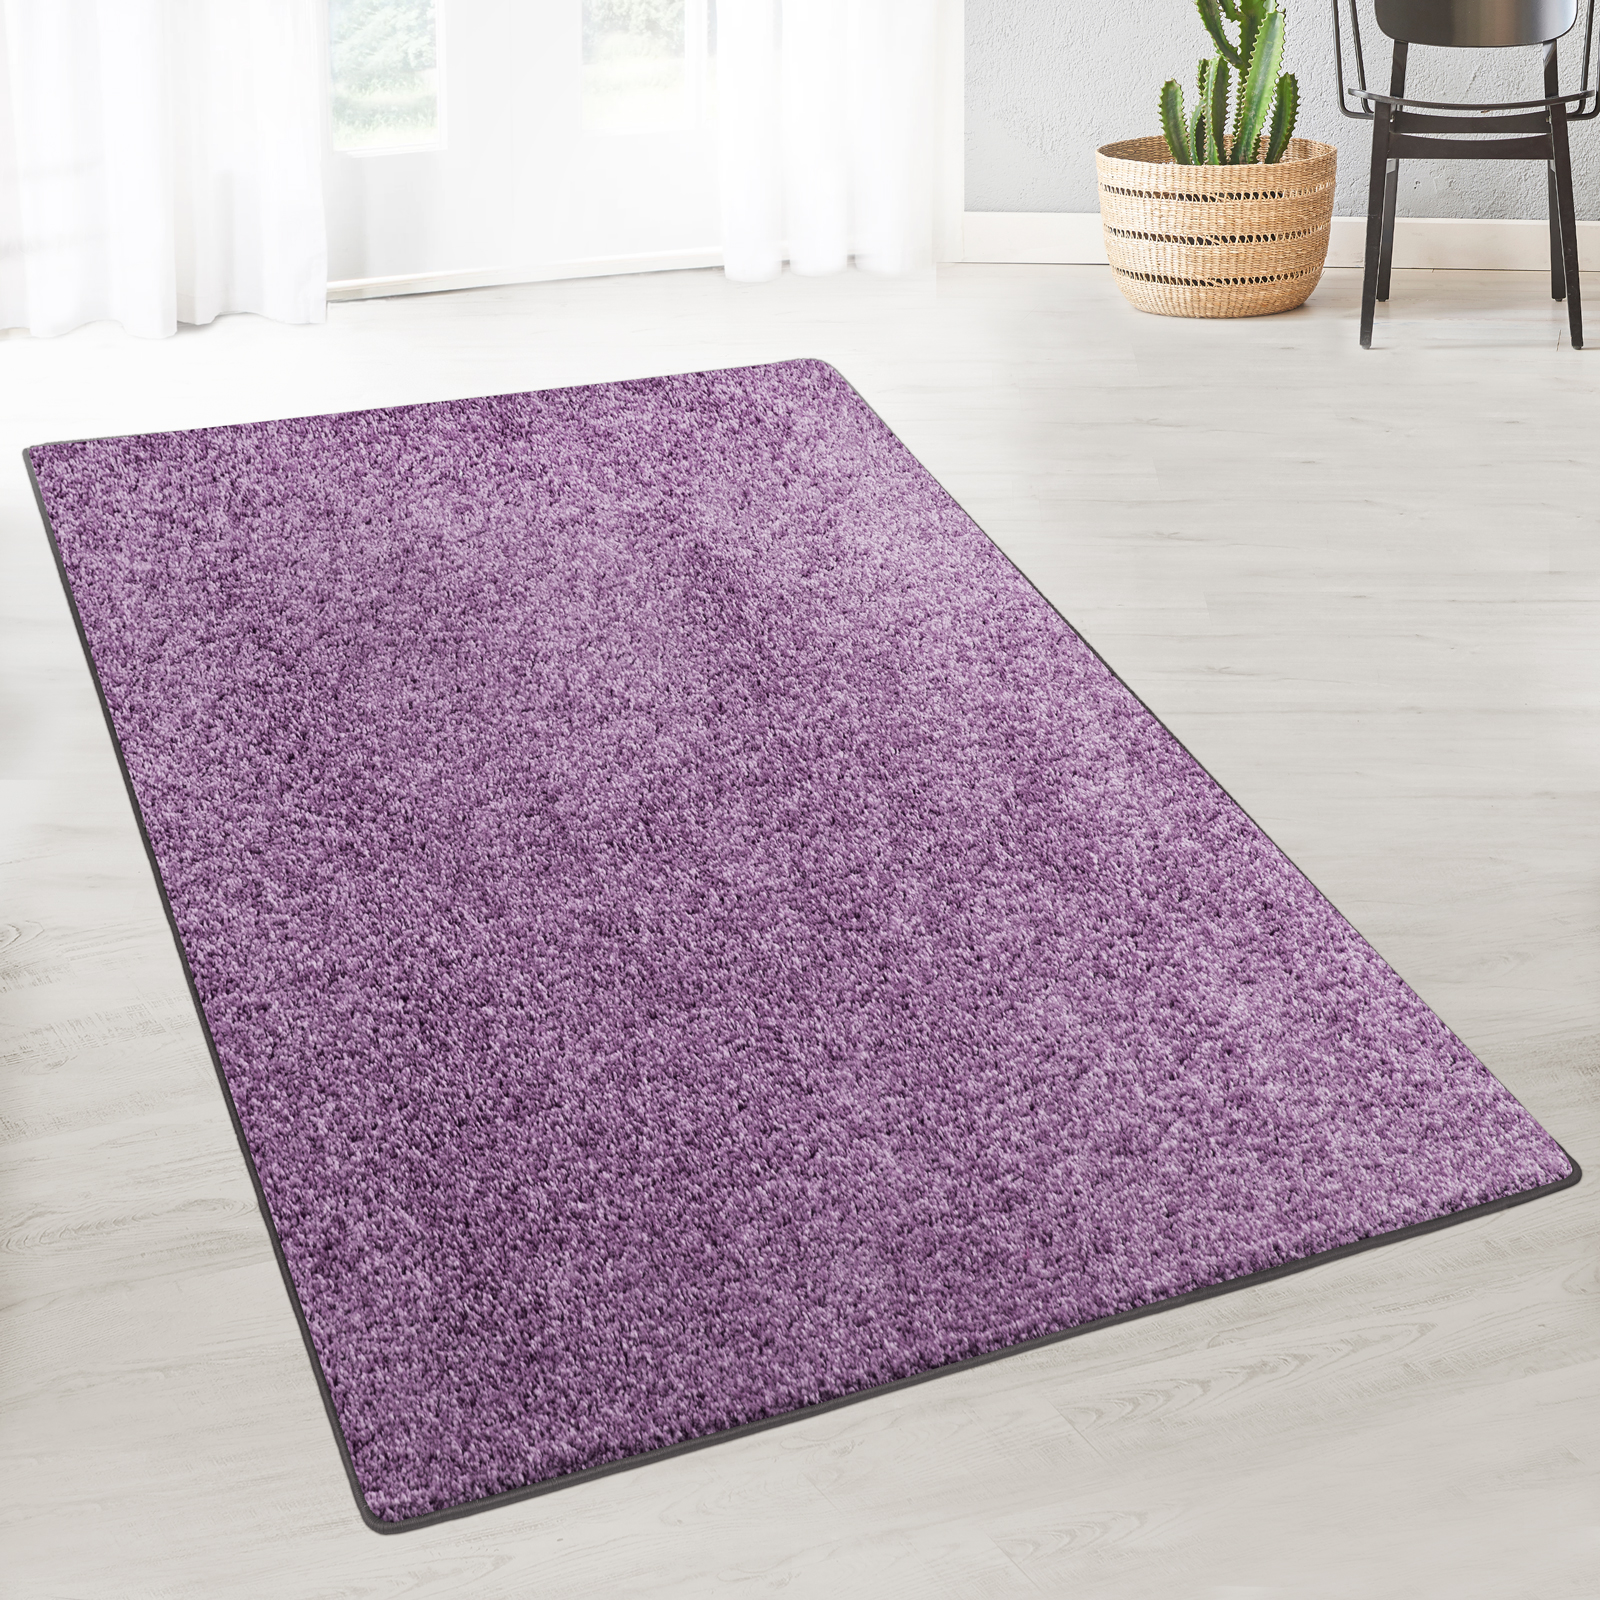 Arte Espina Hochflor Teppich Shaggy Teppiche Uni Lila Violett 60x110cm 